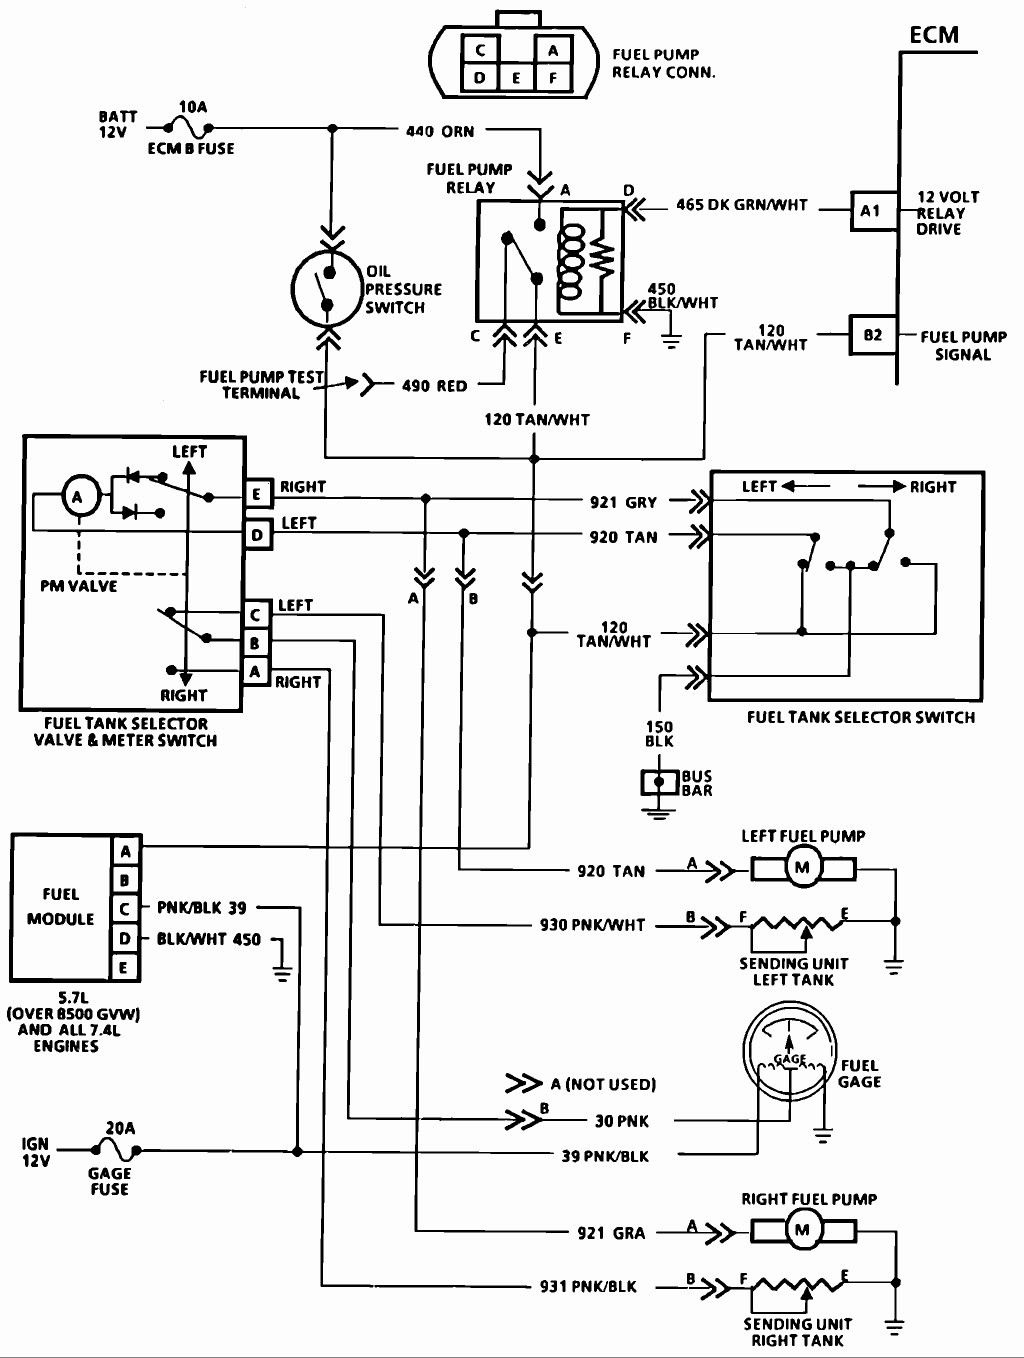 1996 Gmc Sierra Fuel Pump Wiring Diagram from mainetreasurechest.com